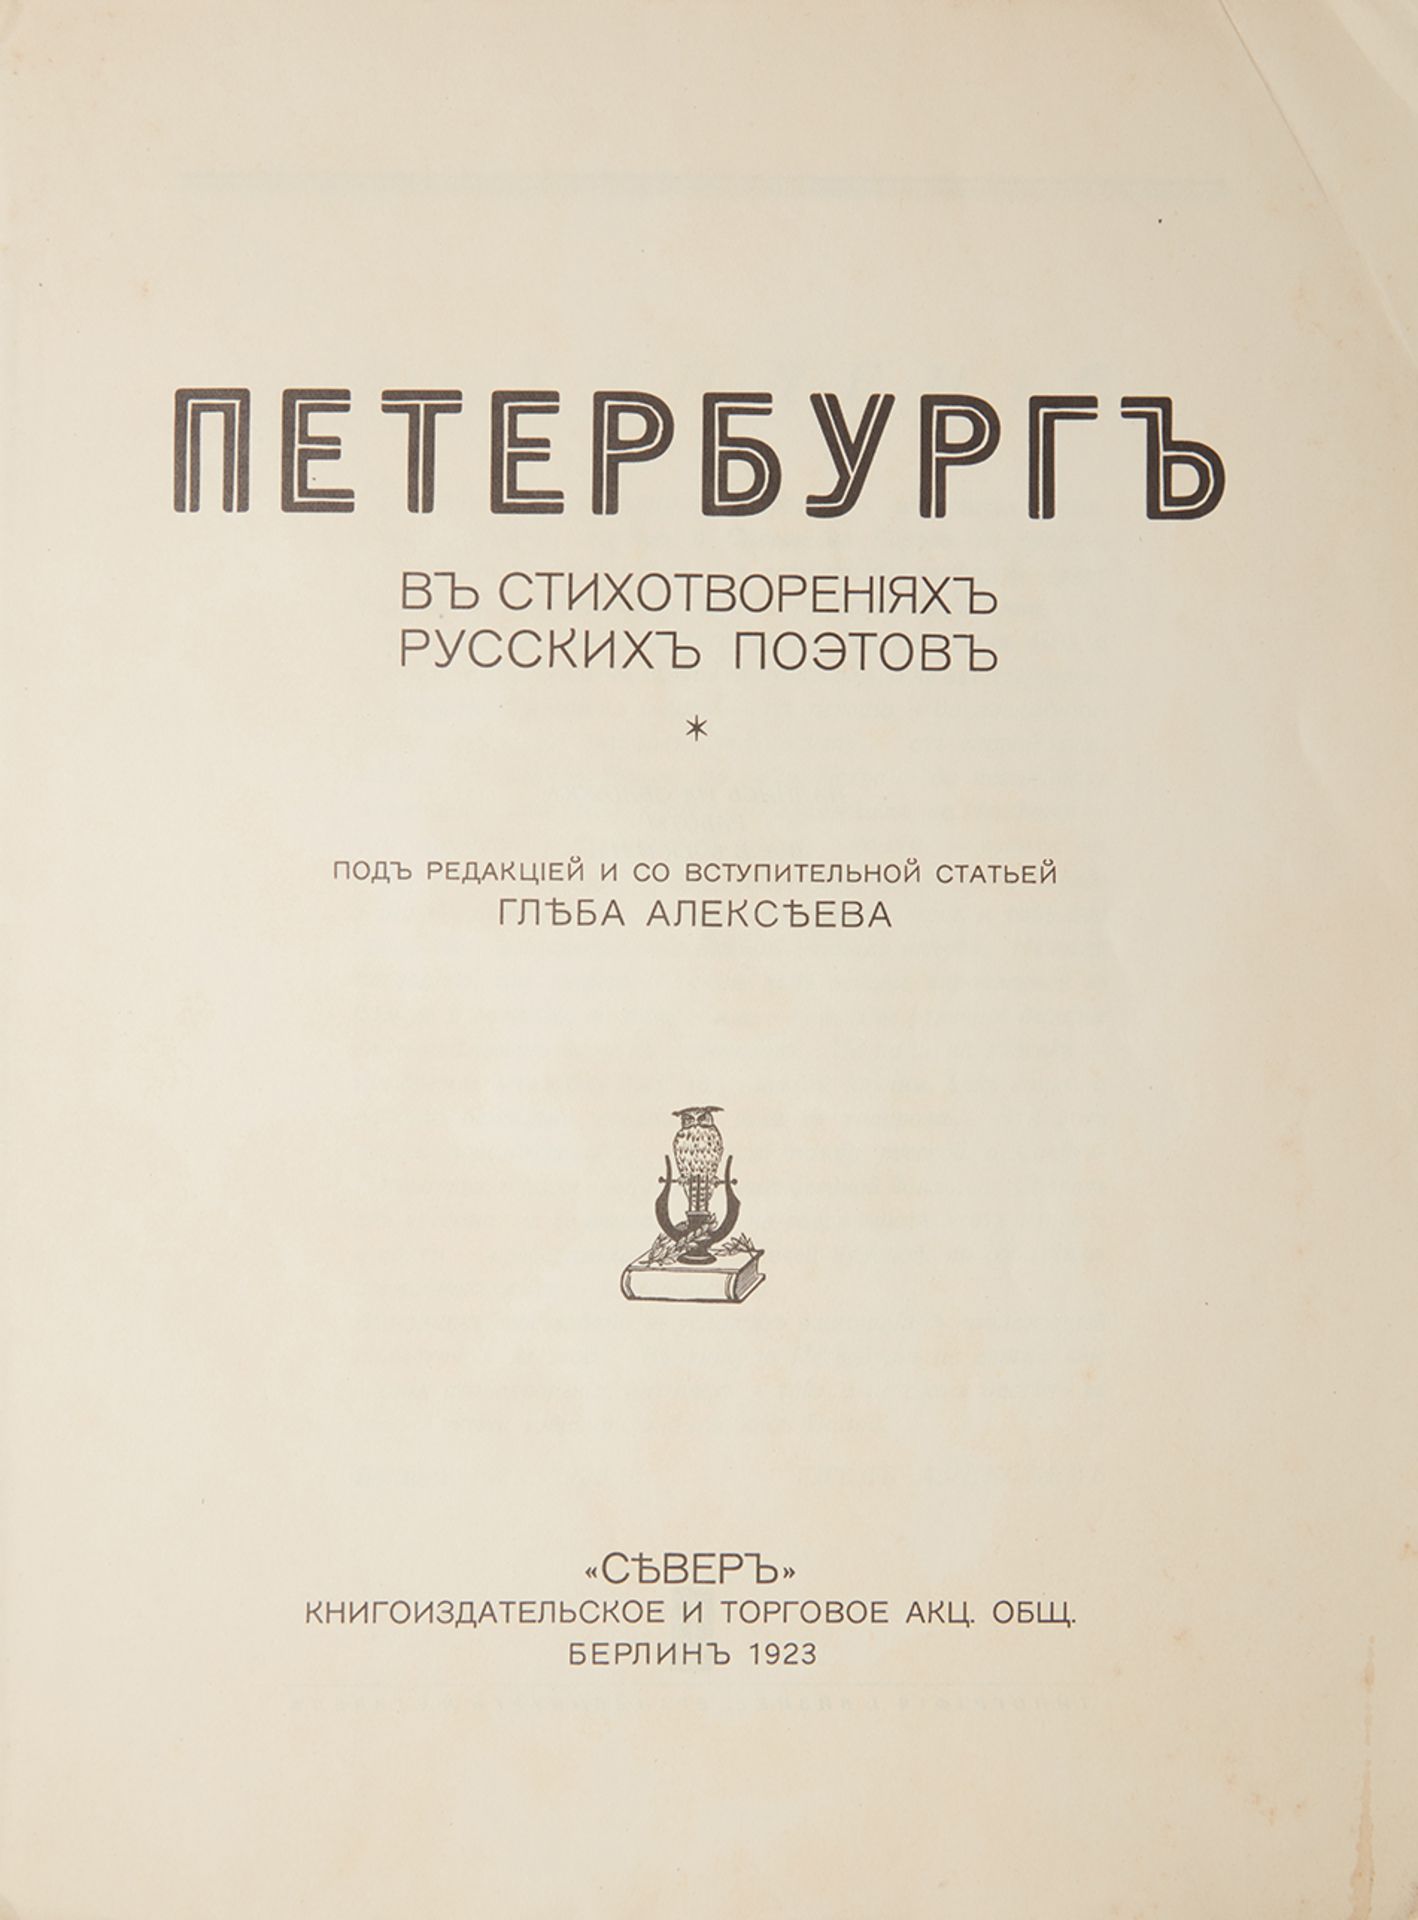 [NABOKOV (SIRIN) VLADIMIR VLADIMIROVICH (1899-1977) - EARLY PUBLICATION] - PETERSBURG [...]